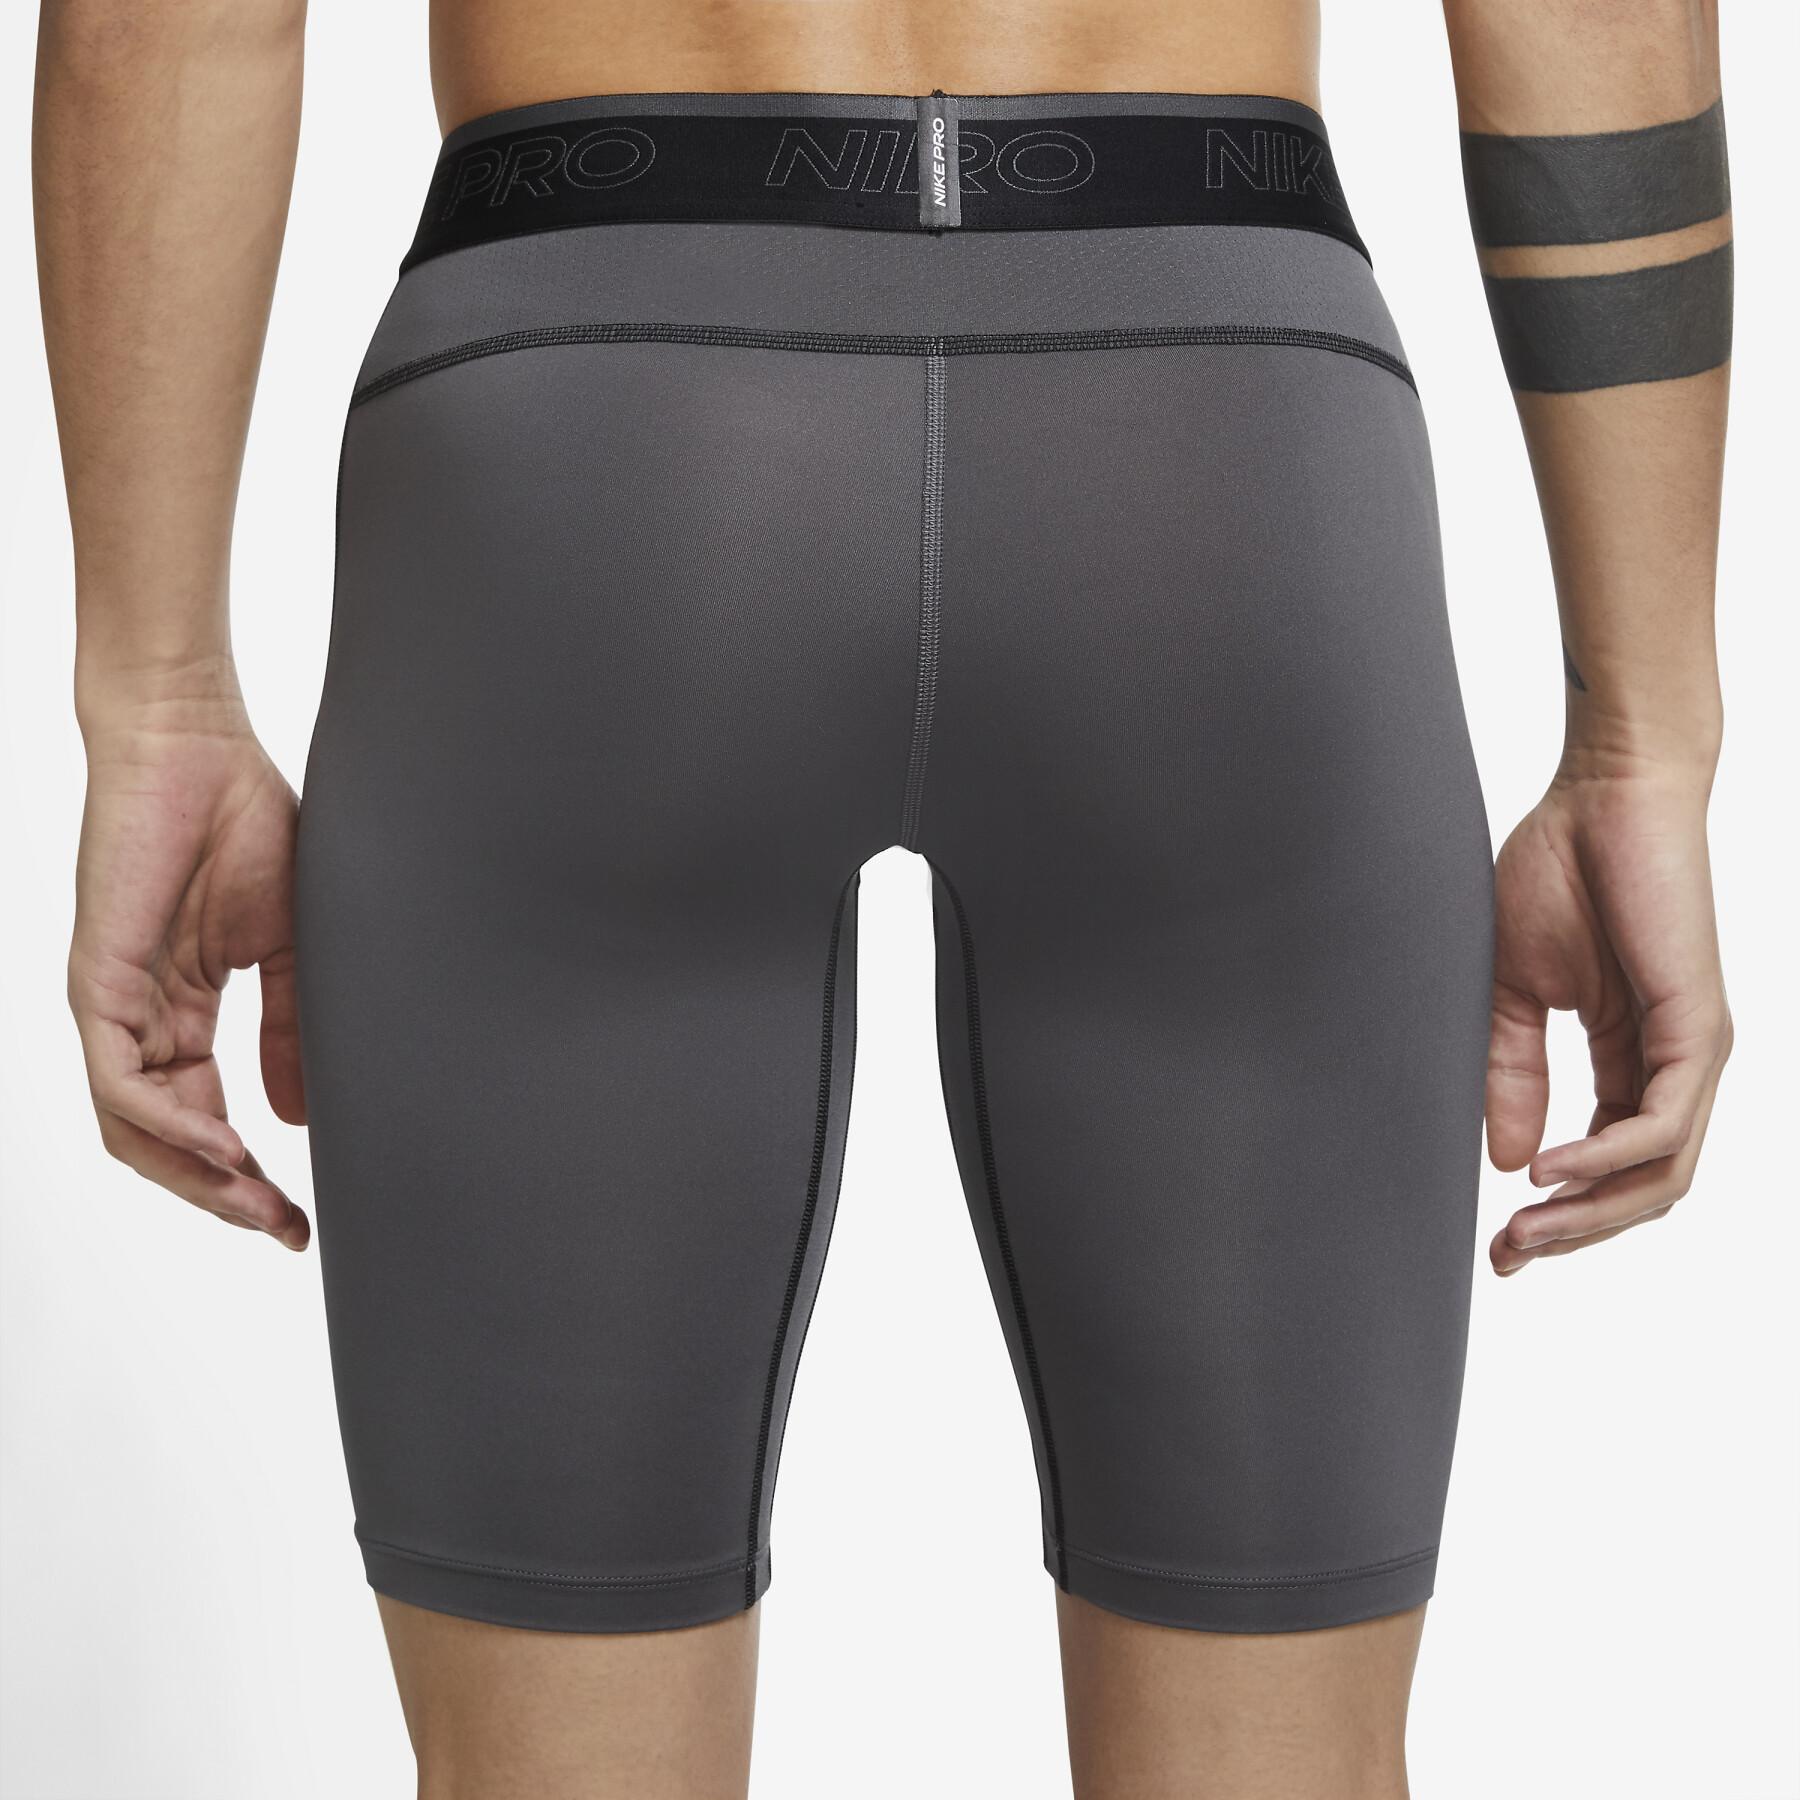 Long compression shorts Nike Dri-Fit - Compression garments ...